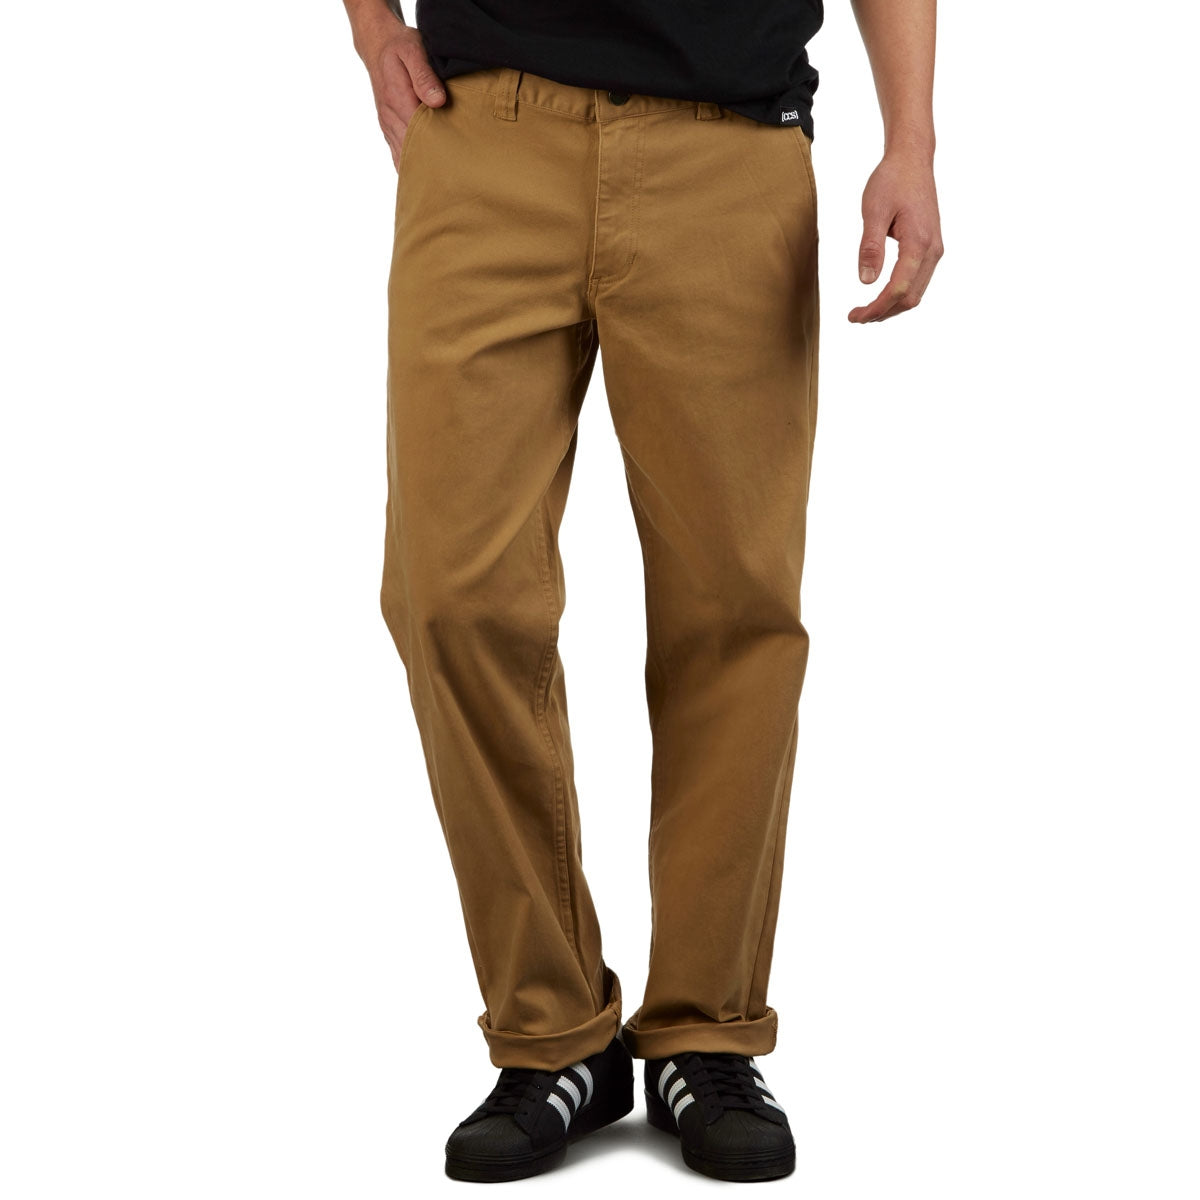 CCS Standard Plus Relaxed Chino Pants - Khaki image 4